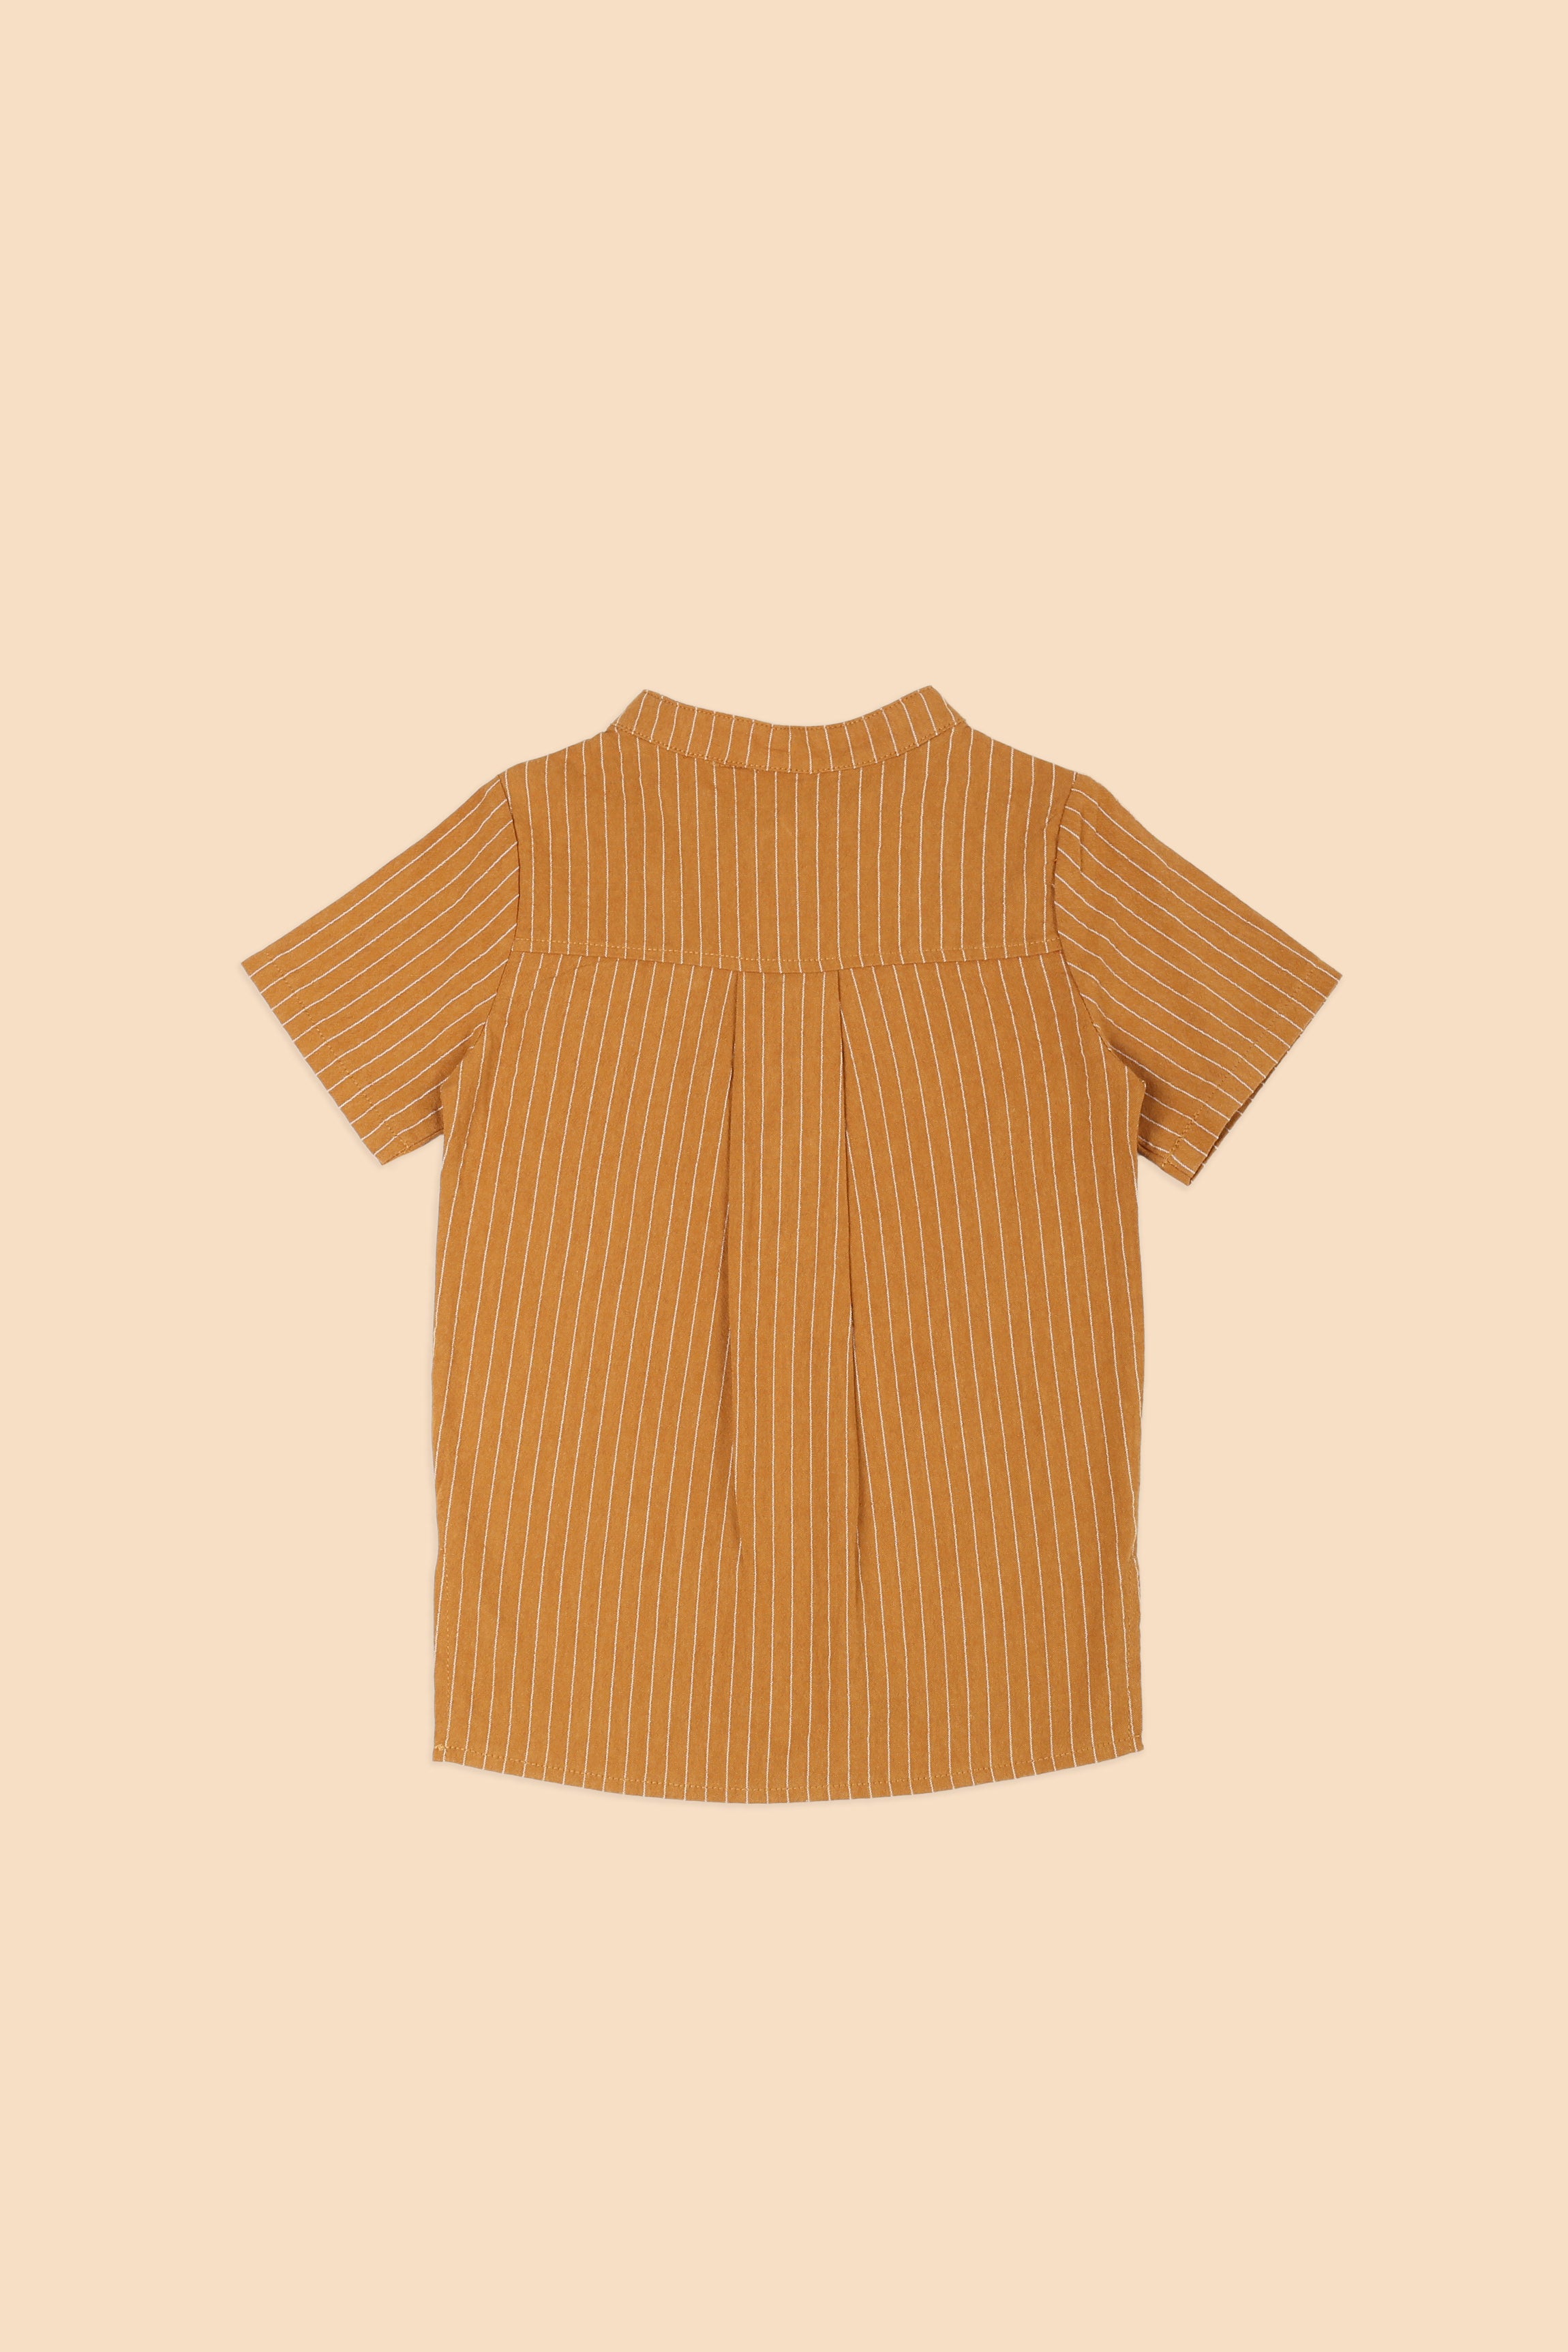 The Nostalgia Short Sleeves Shirt Brown Stripes